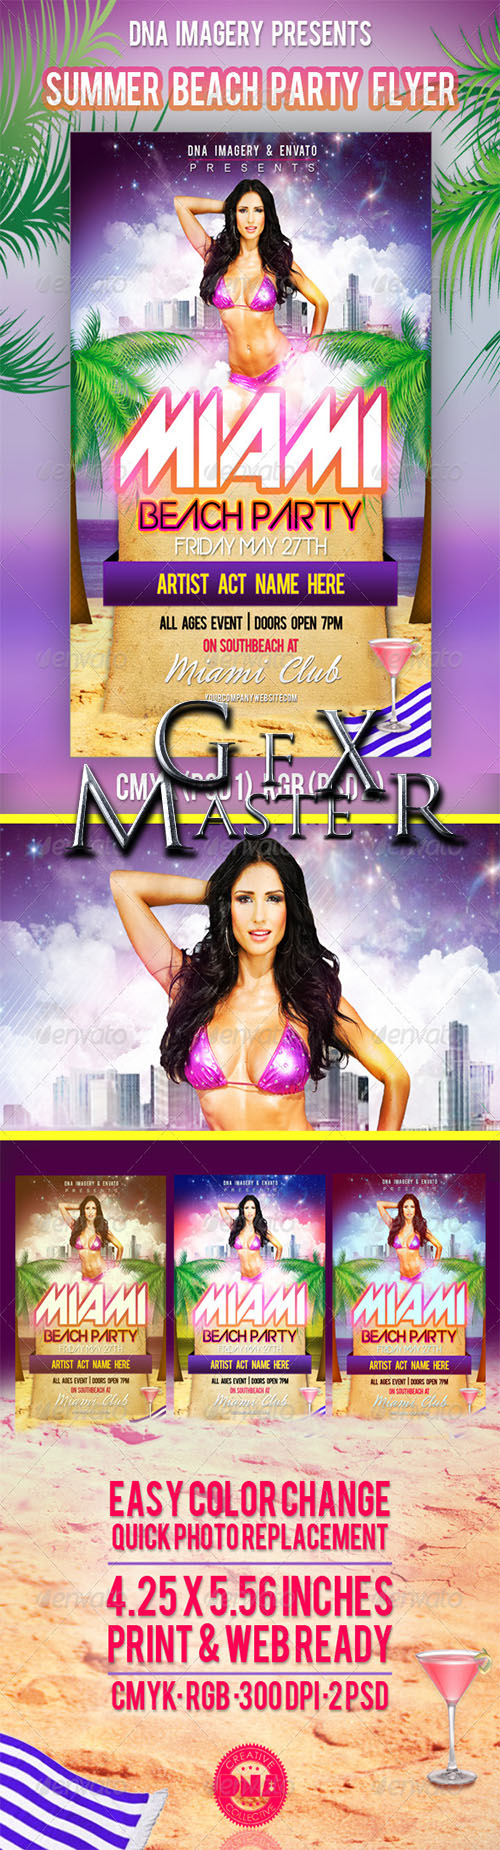 GraphicRiver - Miami Beach Party Flyer